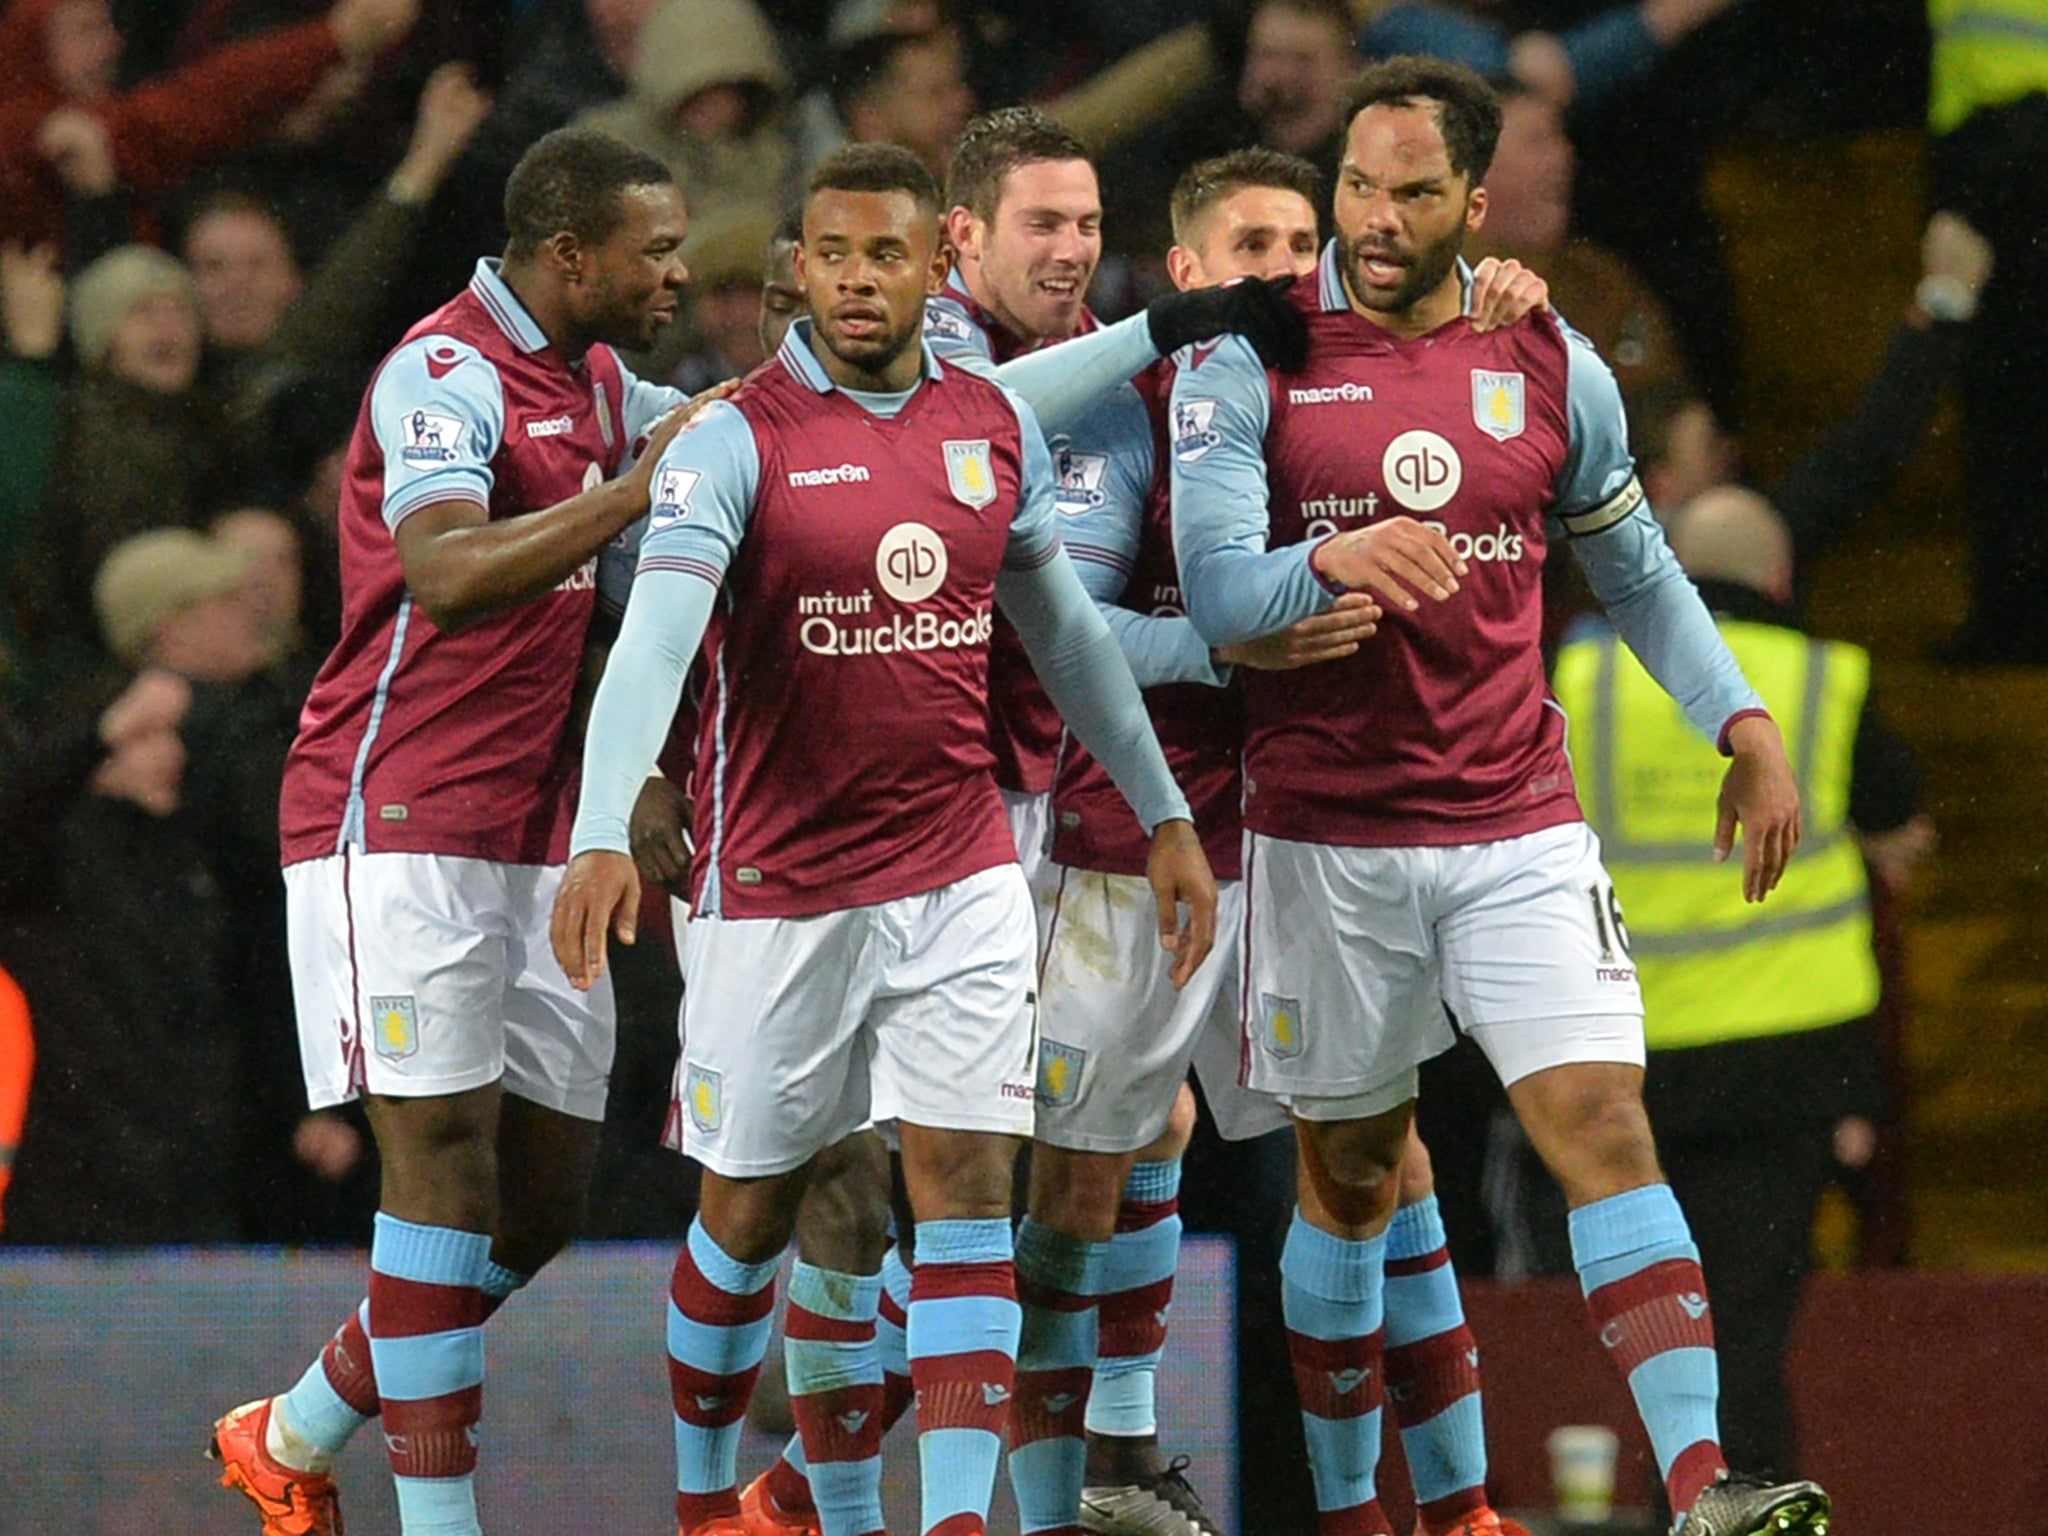 Aston Villa's players congratulate Joleon Lescott on his goal